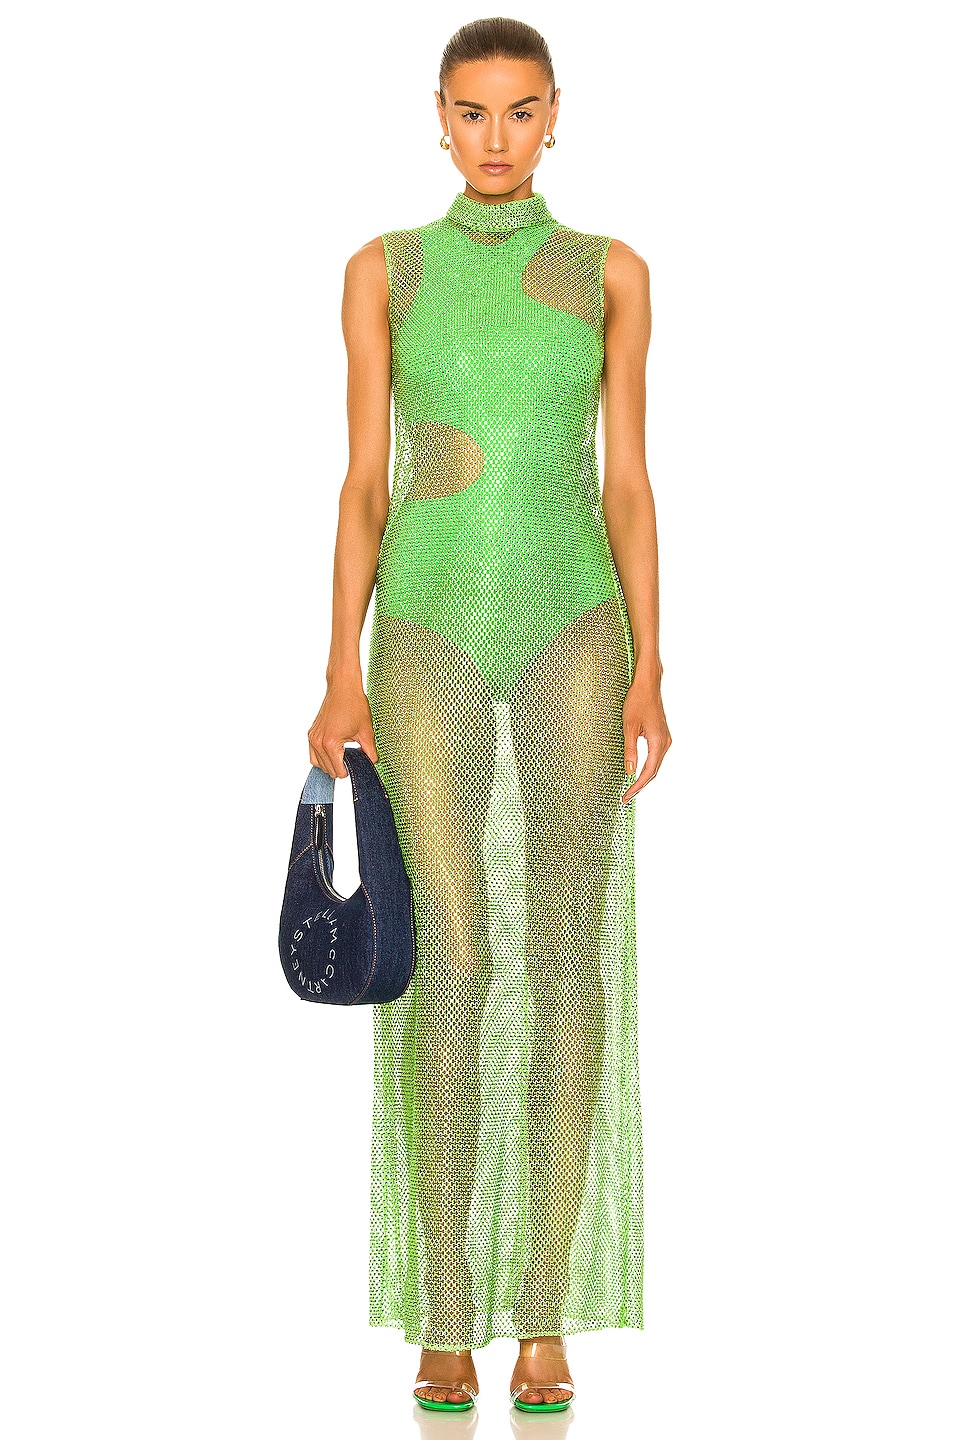 Stella McCartney Green Crystal Mesh Dress in Green Fluorescent | FWRD